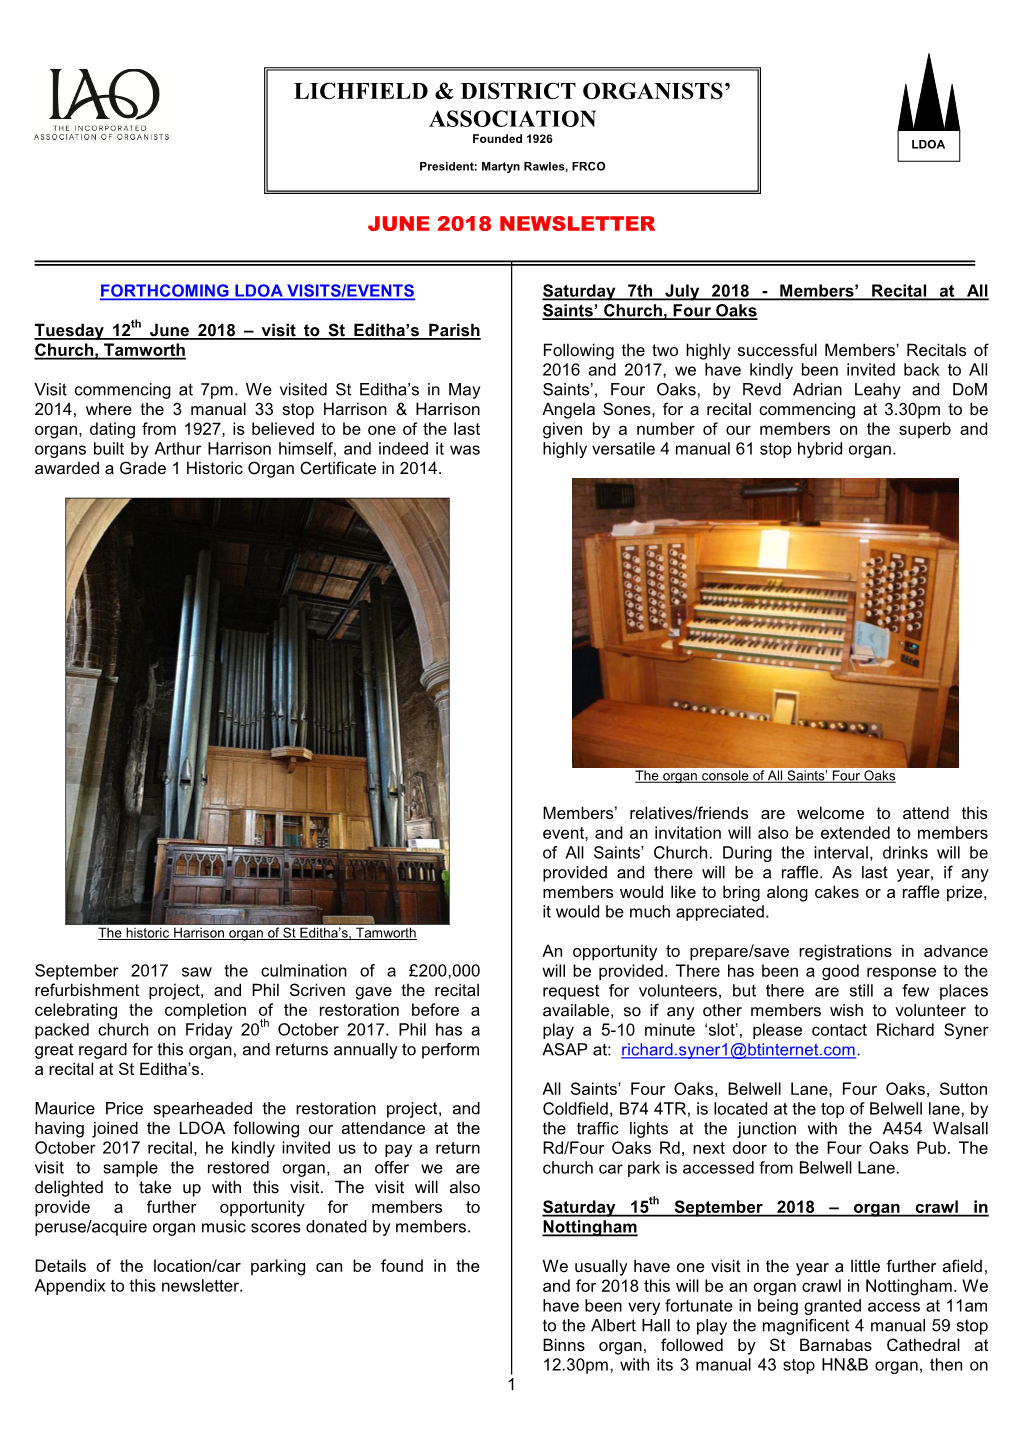 Lichfield & District Organists' Association